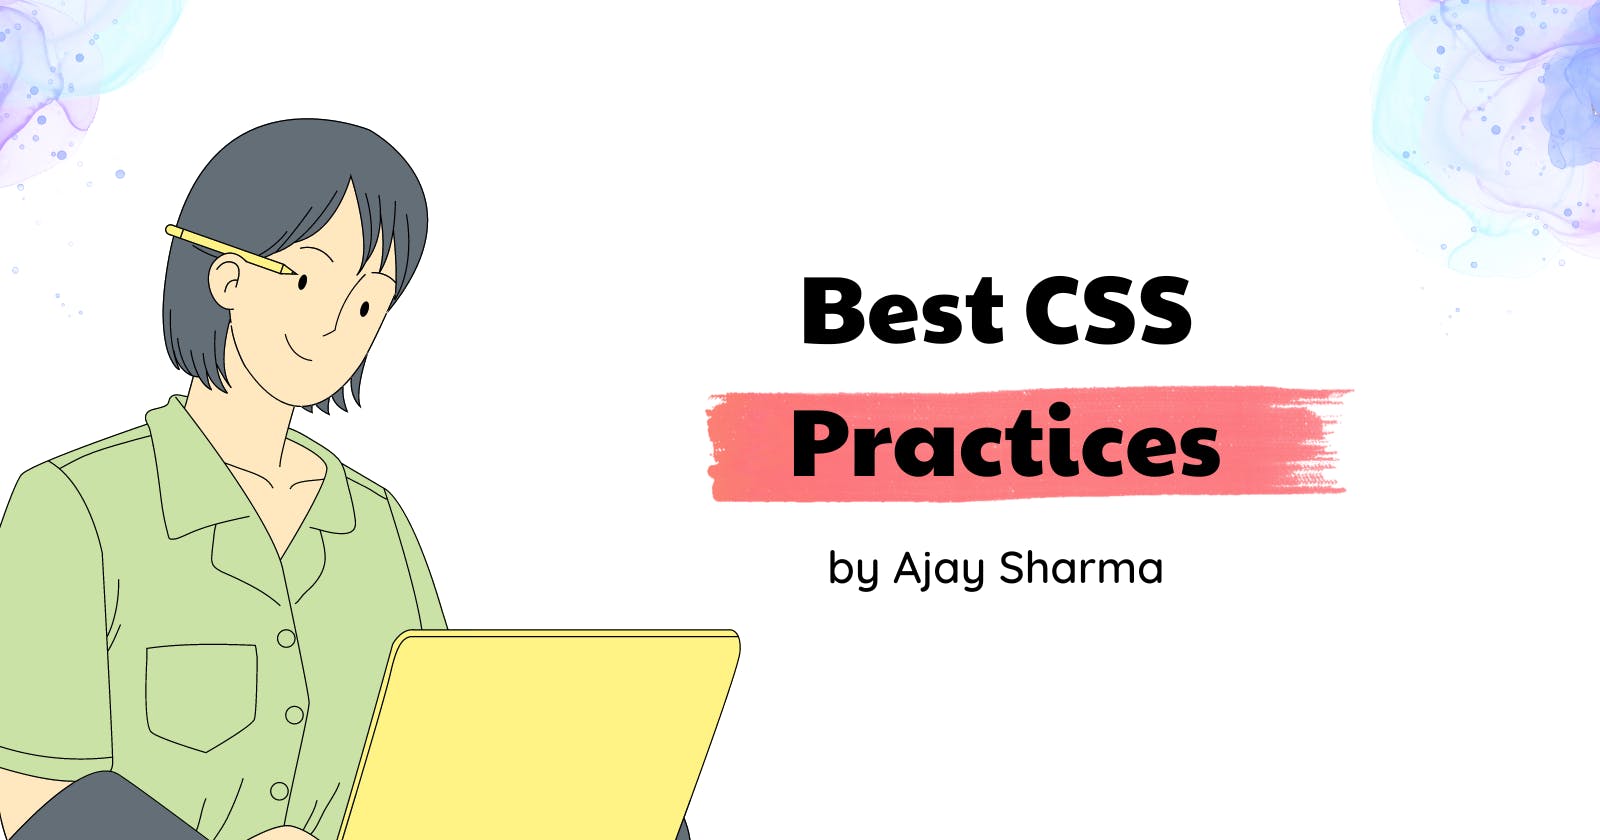 Best CSS Practices